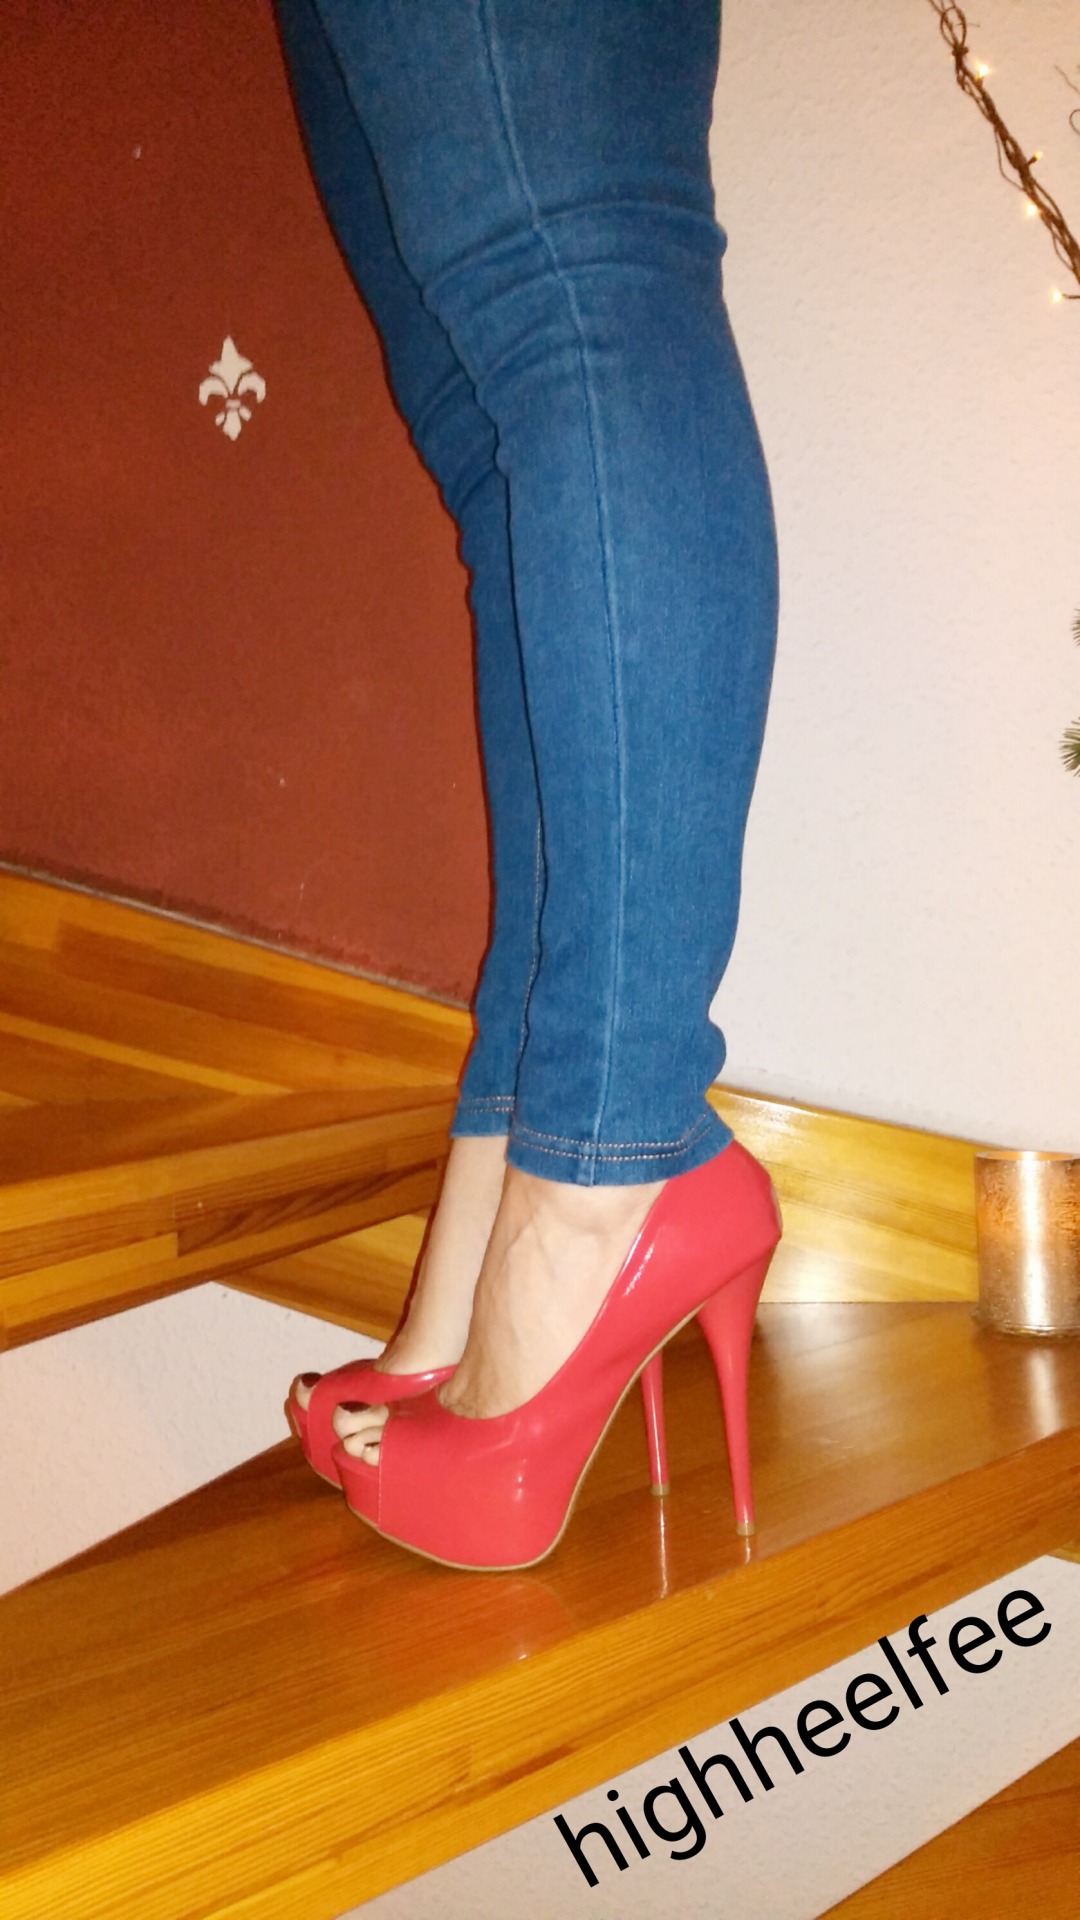 I Love Heels